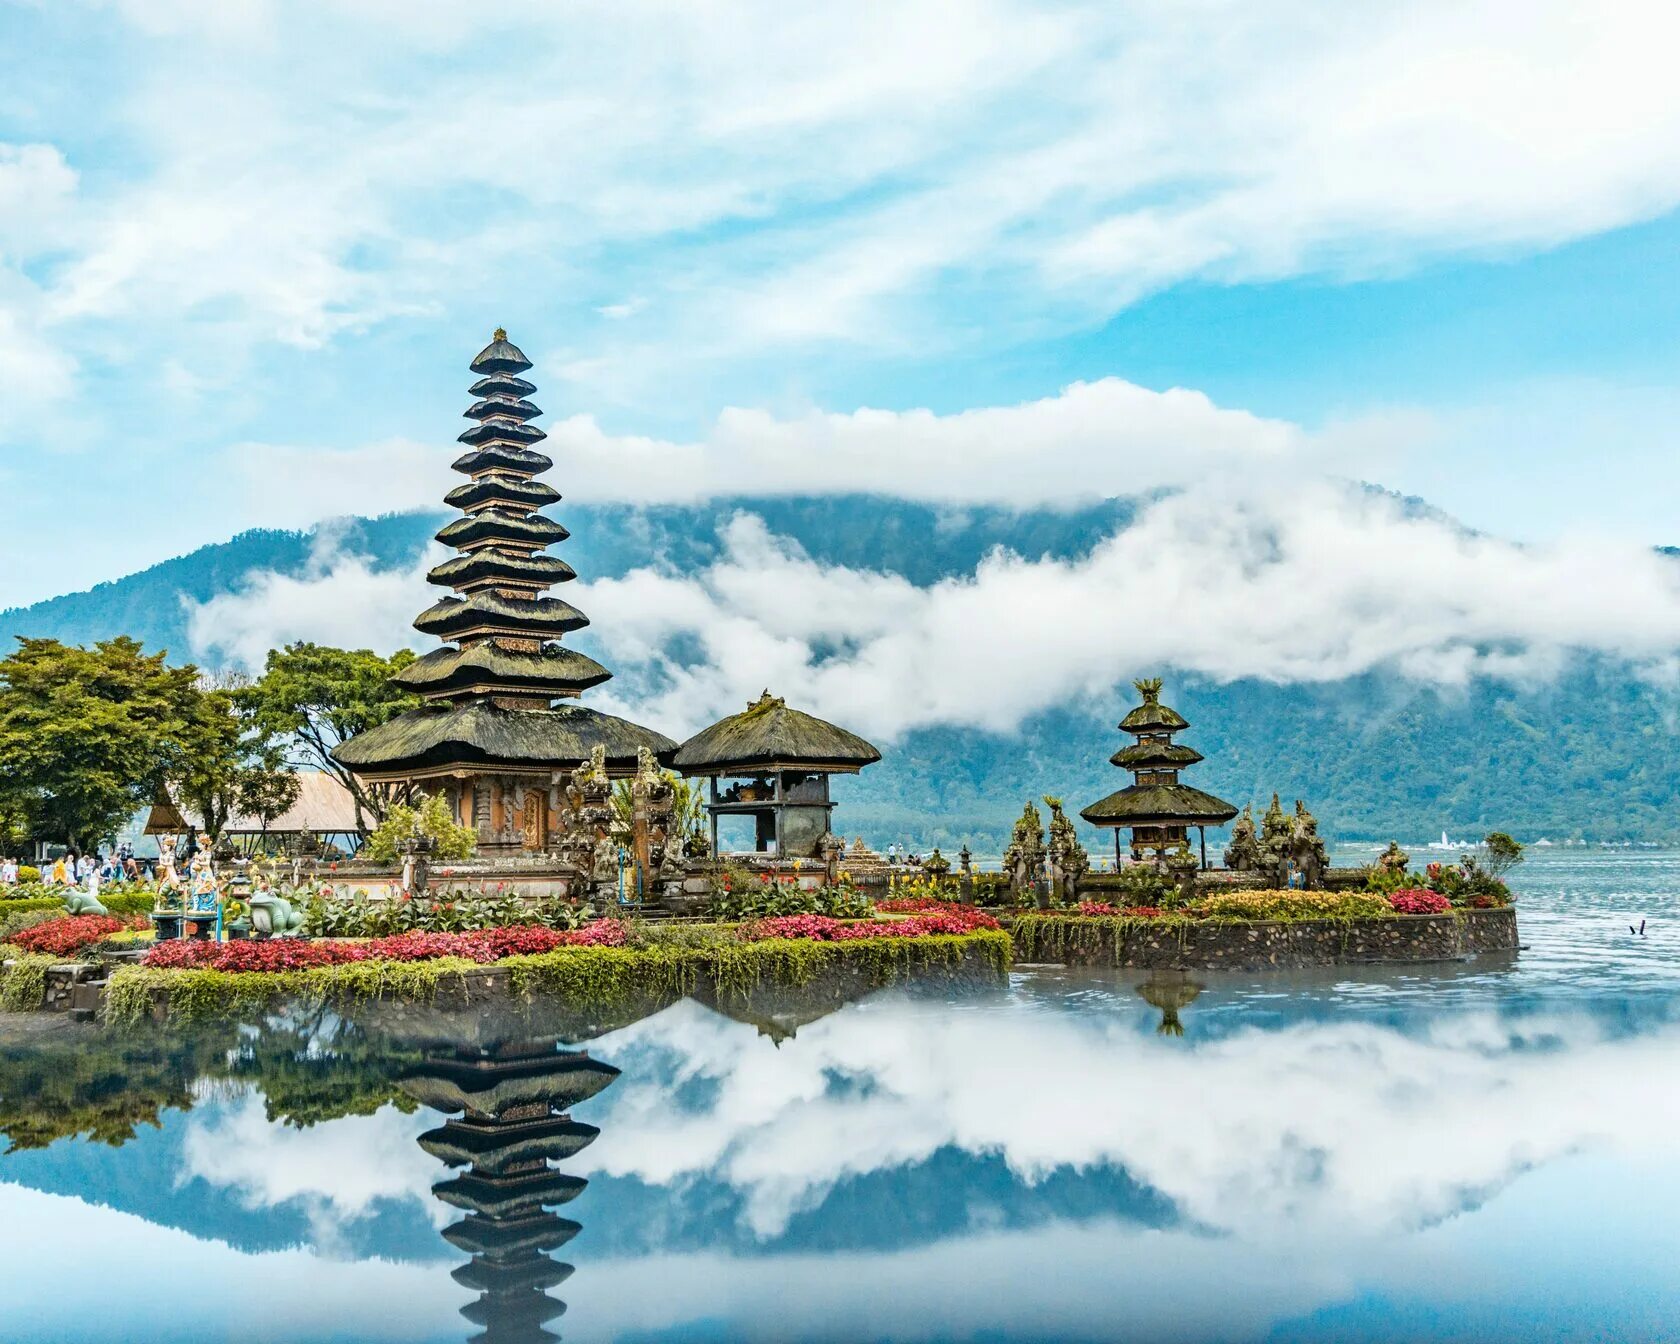 Храм Пура улун дану. Индонезия Бали. Пура Бесаких, Бали, Индонезия. Бали (остров в малайском архипелаге).